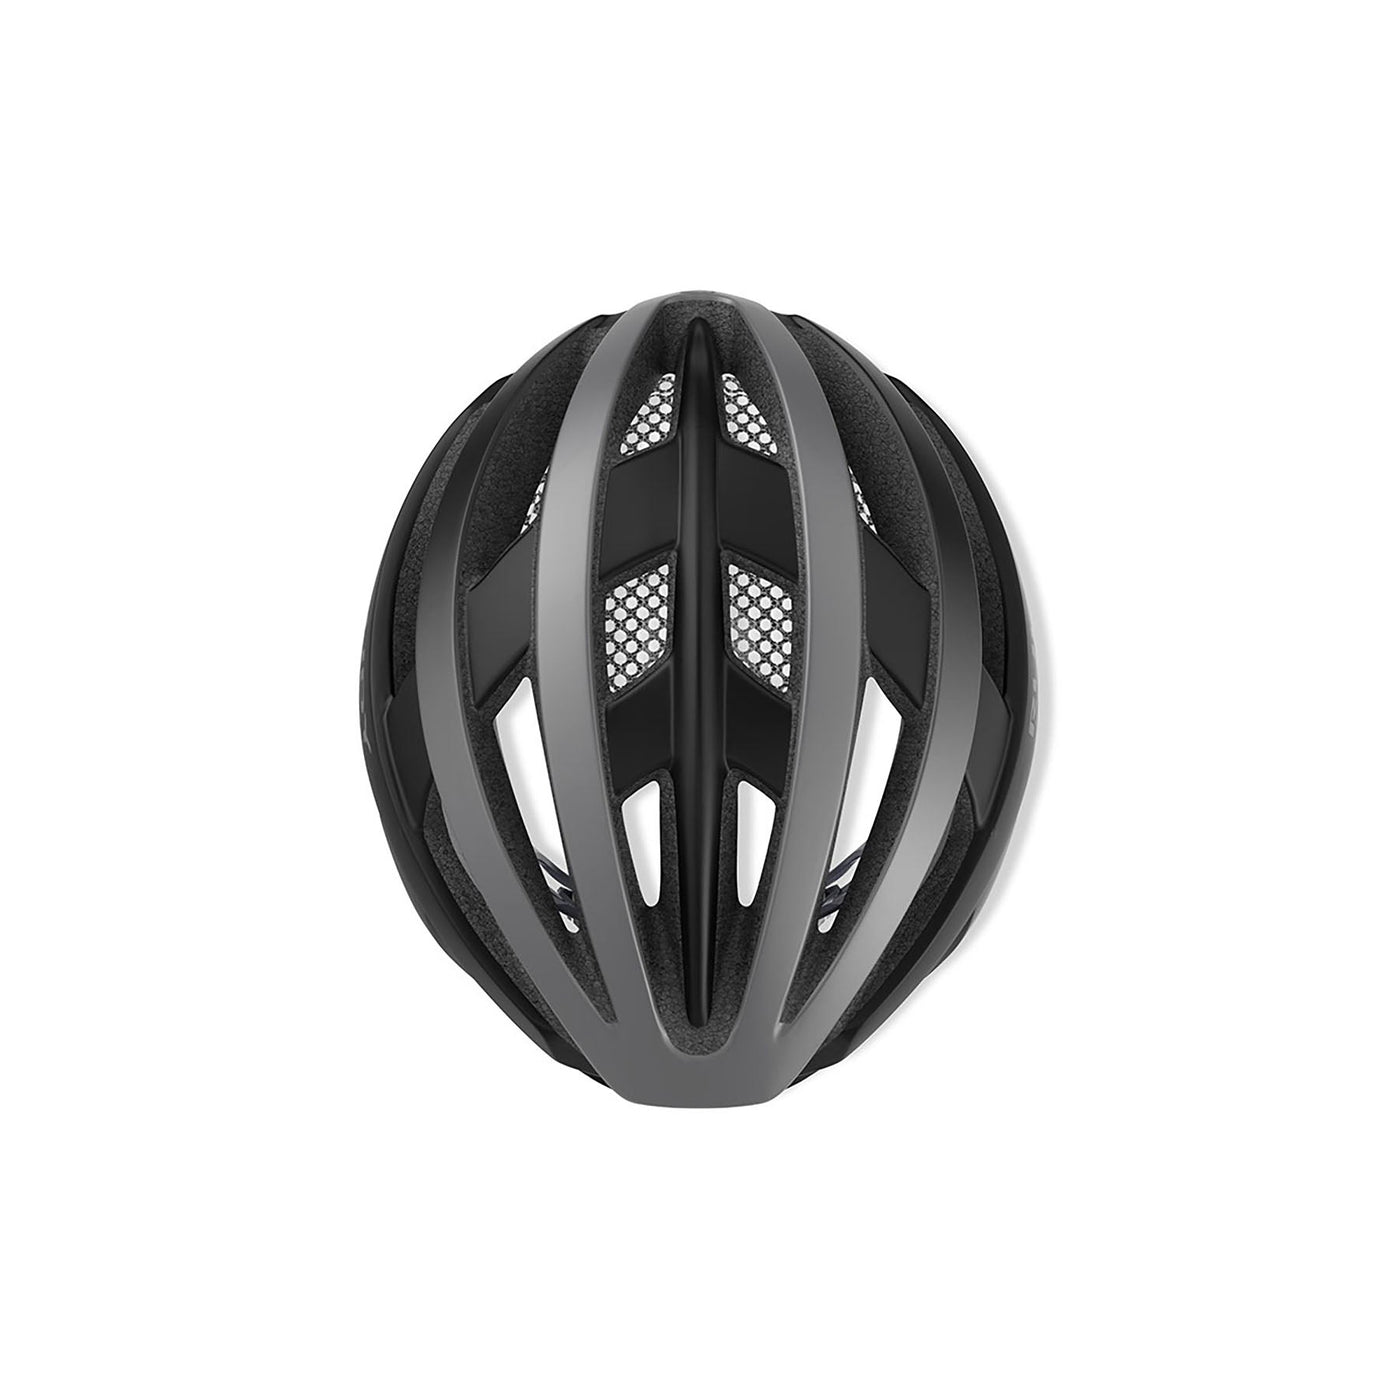 Rudy Project Venger cycling and bike helmet#color_venger-titanium-black-matte